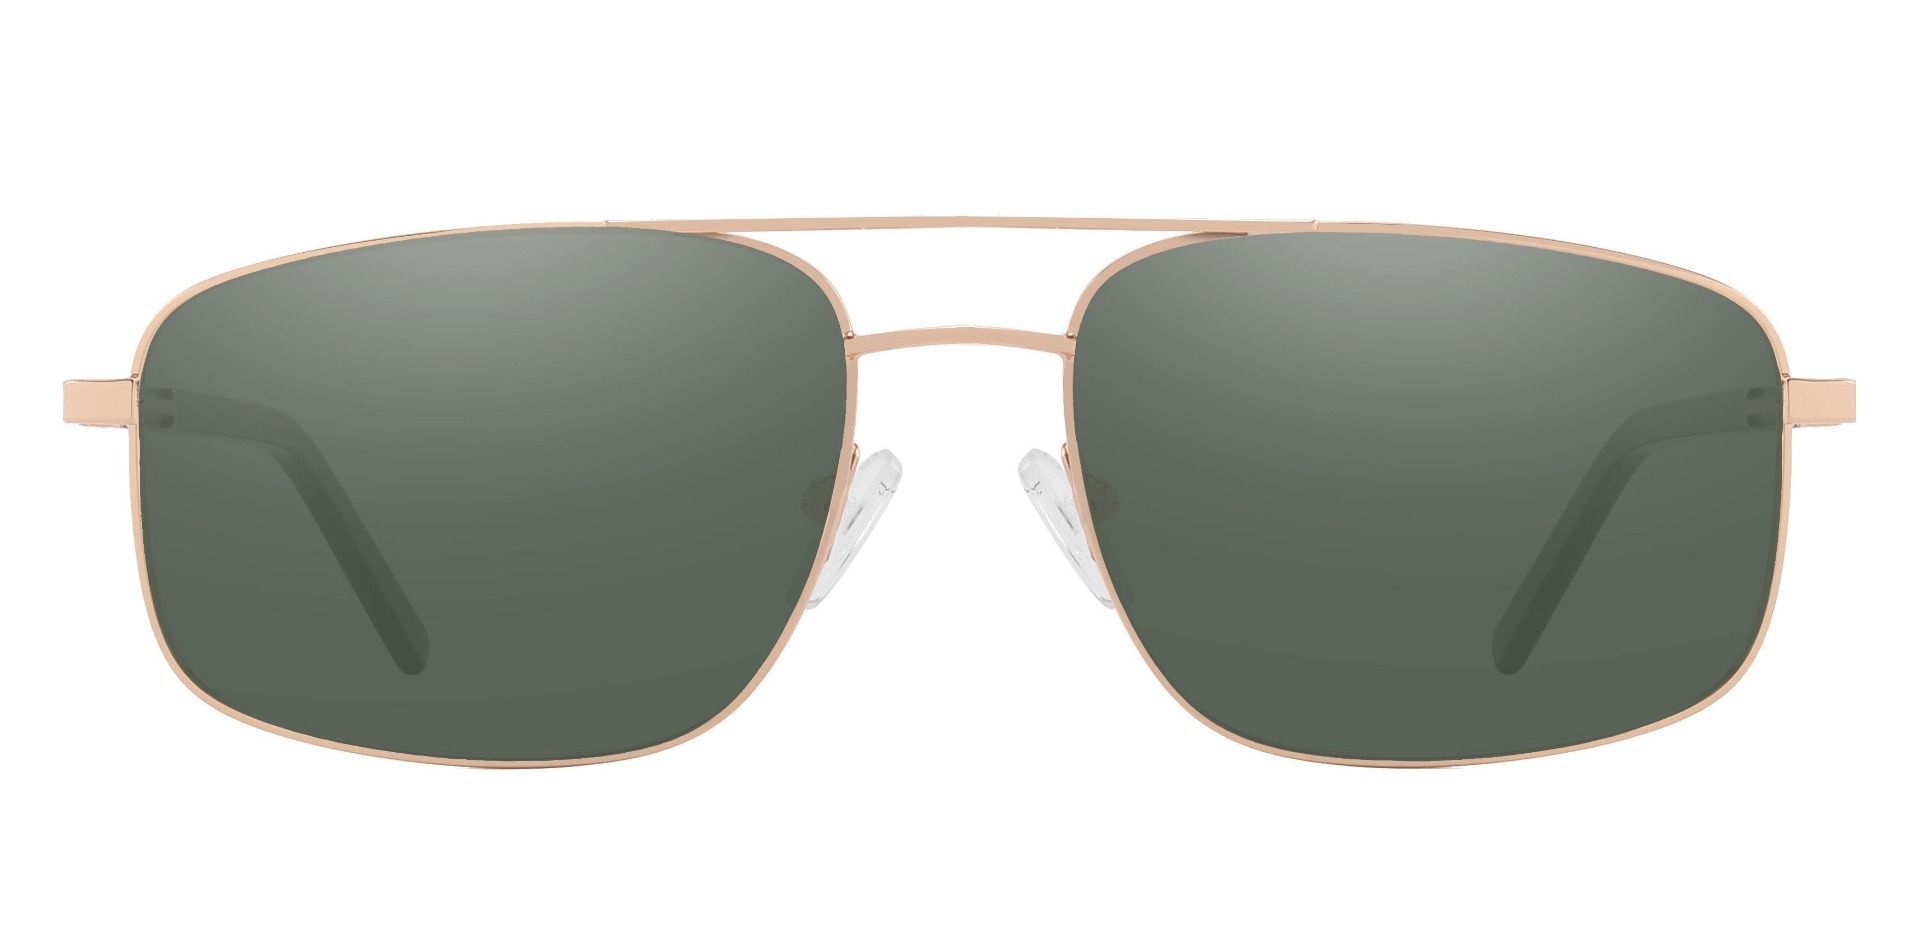 Davenport Aviator Prescription Sunglasses - Gold Frame With Green Lenses